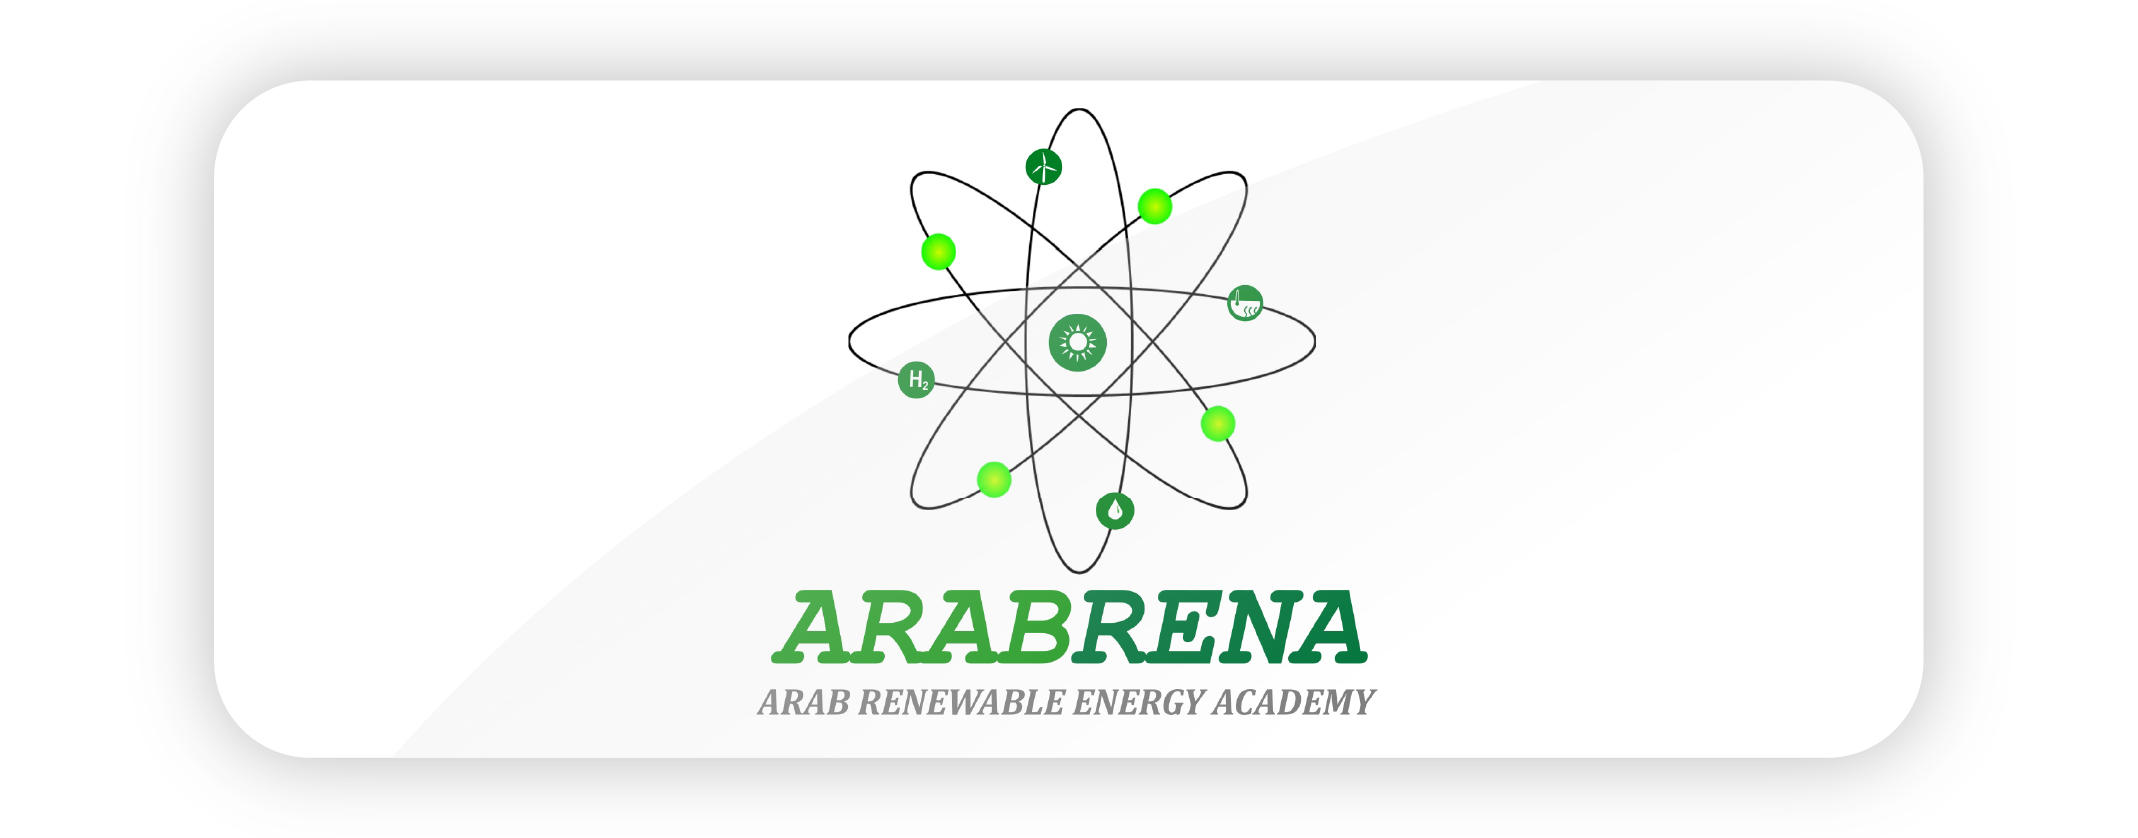 Arabrena logo